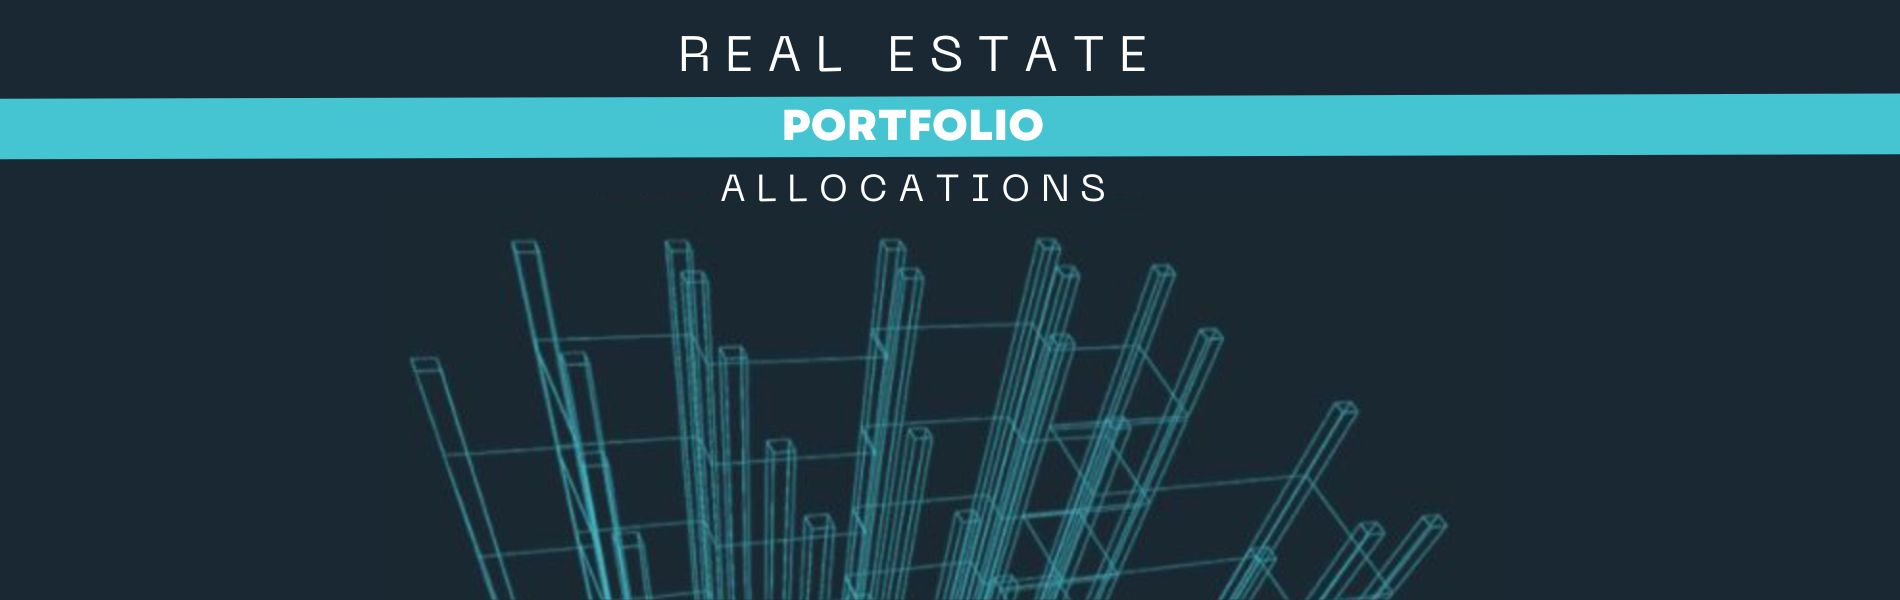 Real Estate Portfolio Allocations